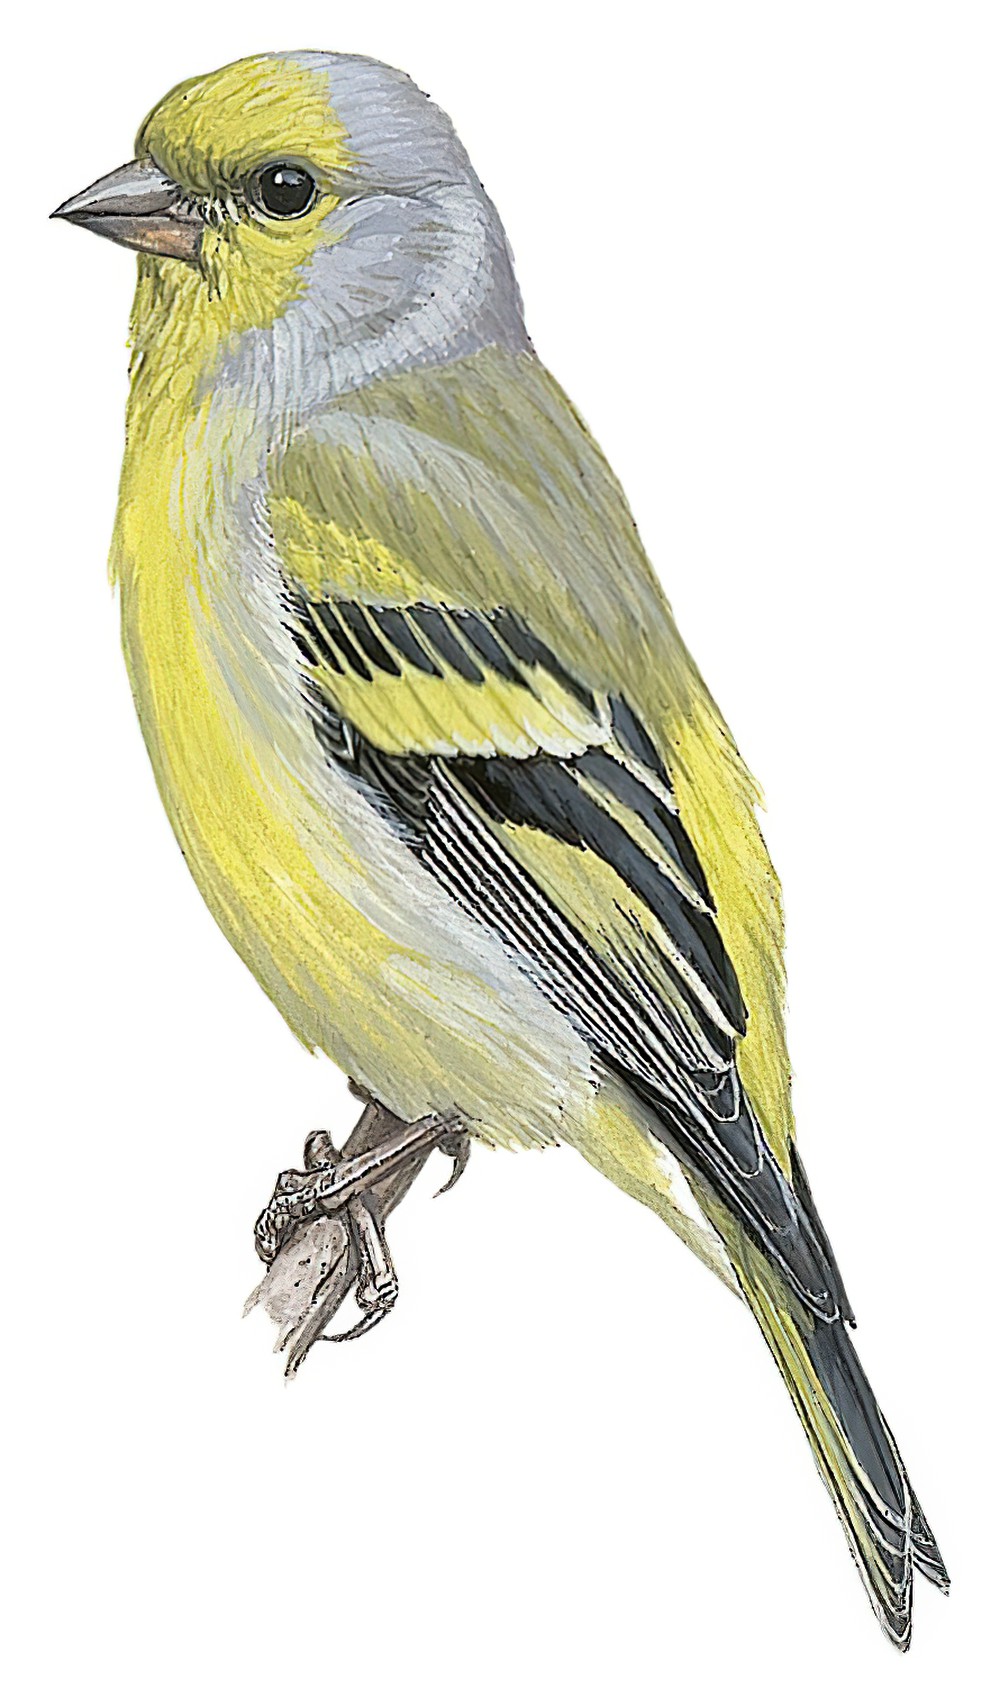 Citril Finch / Carduelis citrinella